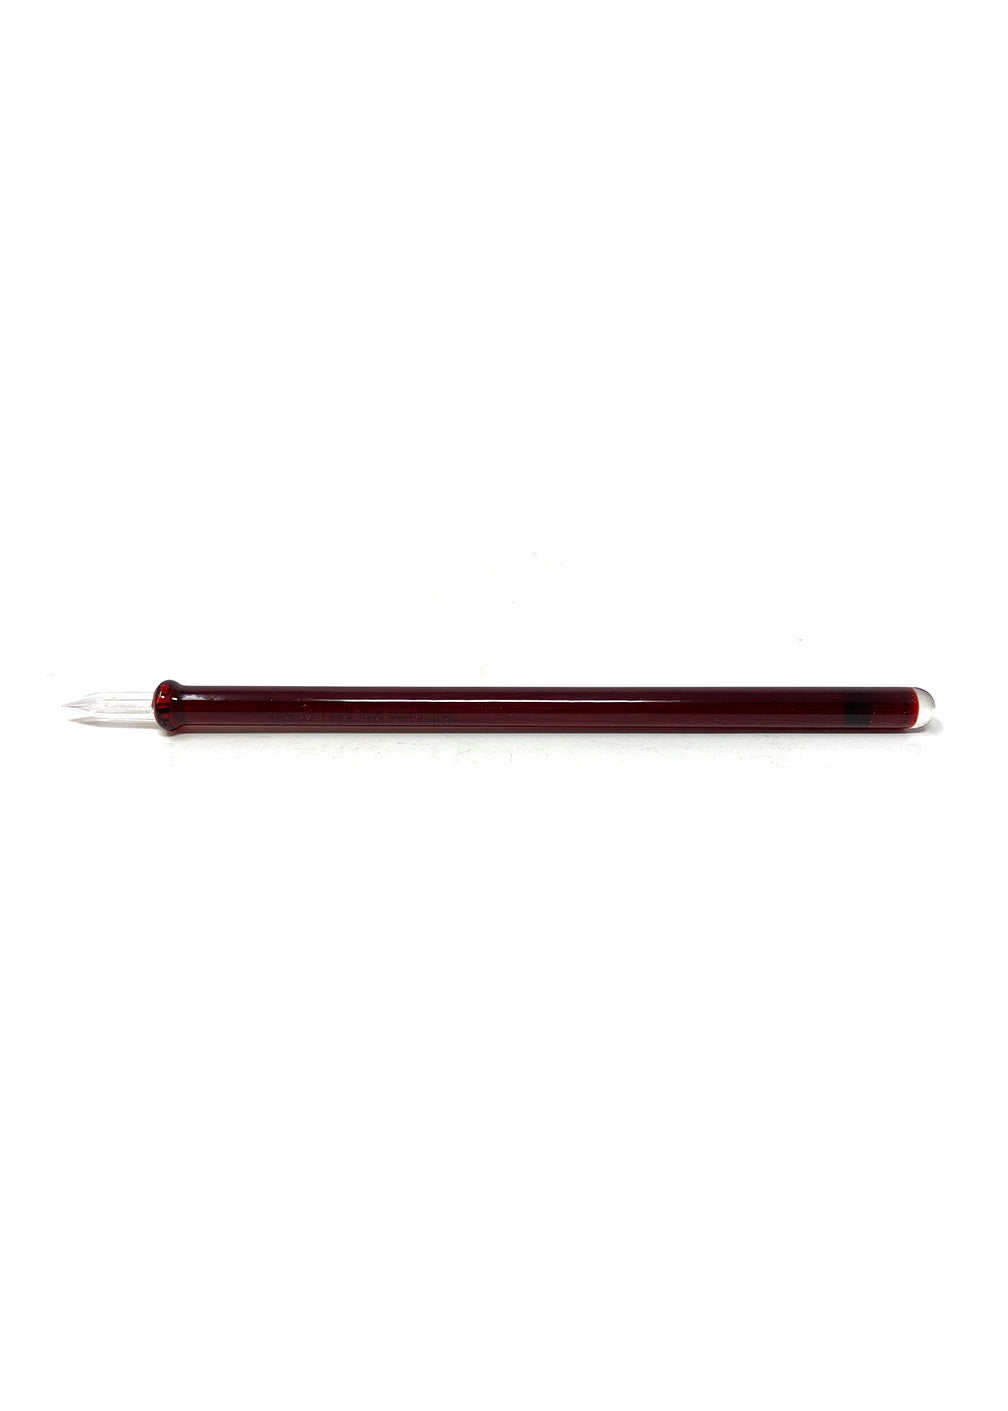 Handmade Glass Dip Pen - Garnet Red, Long